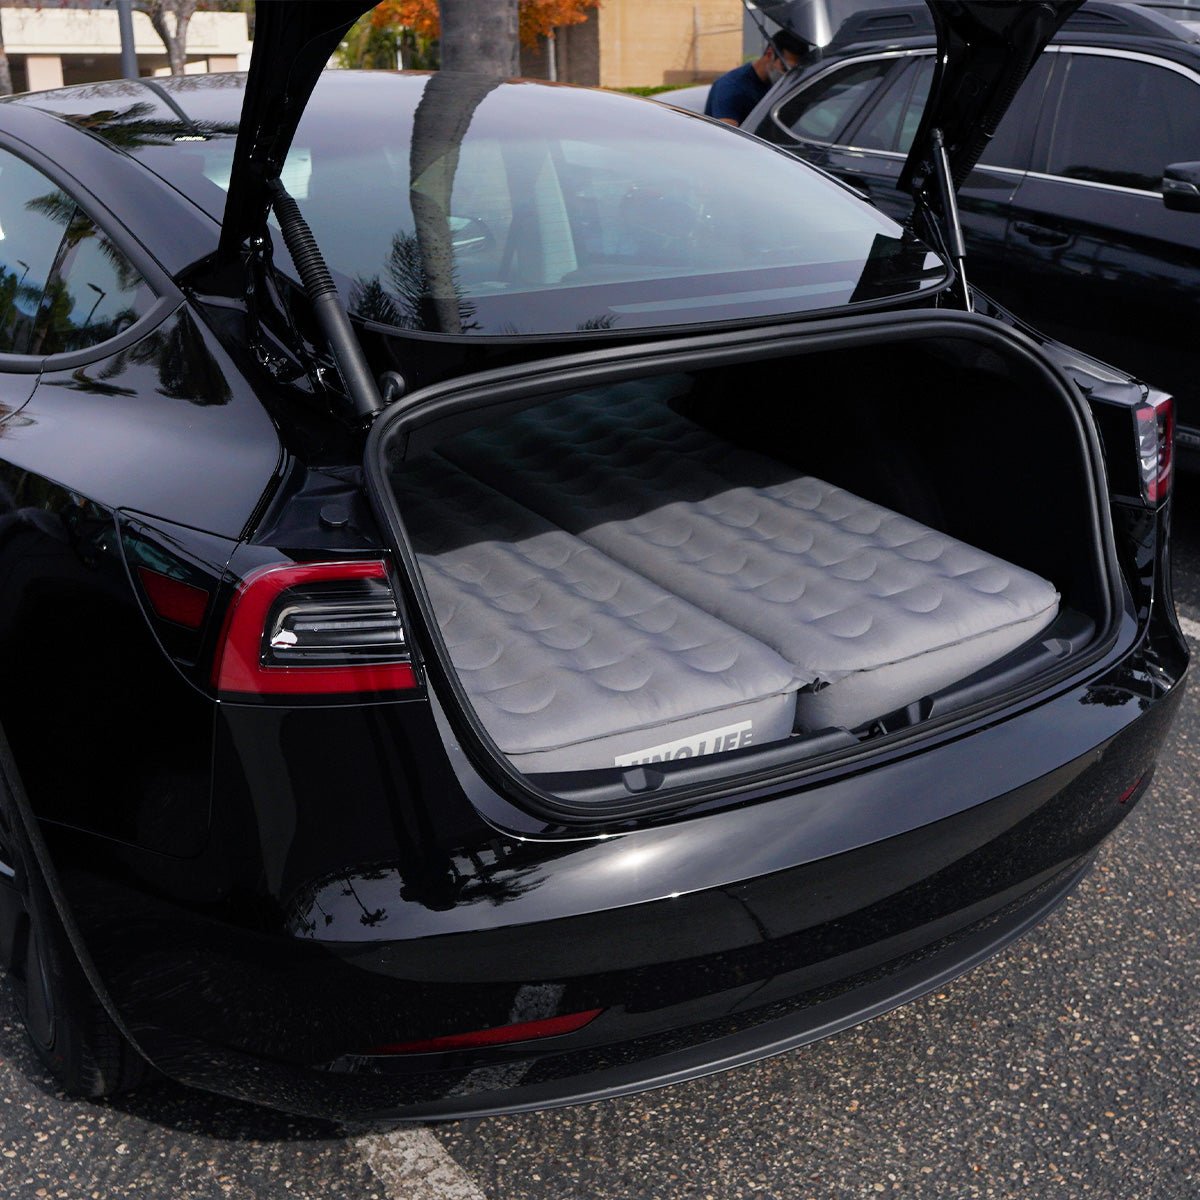 Tesla Matelas Portable Camping Air Bed Cushion Pour Tesla Model 3